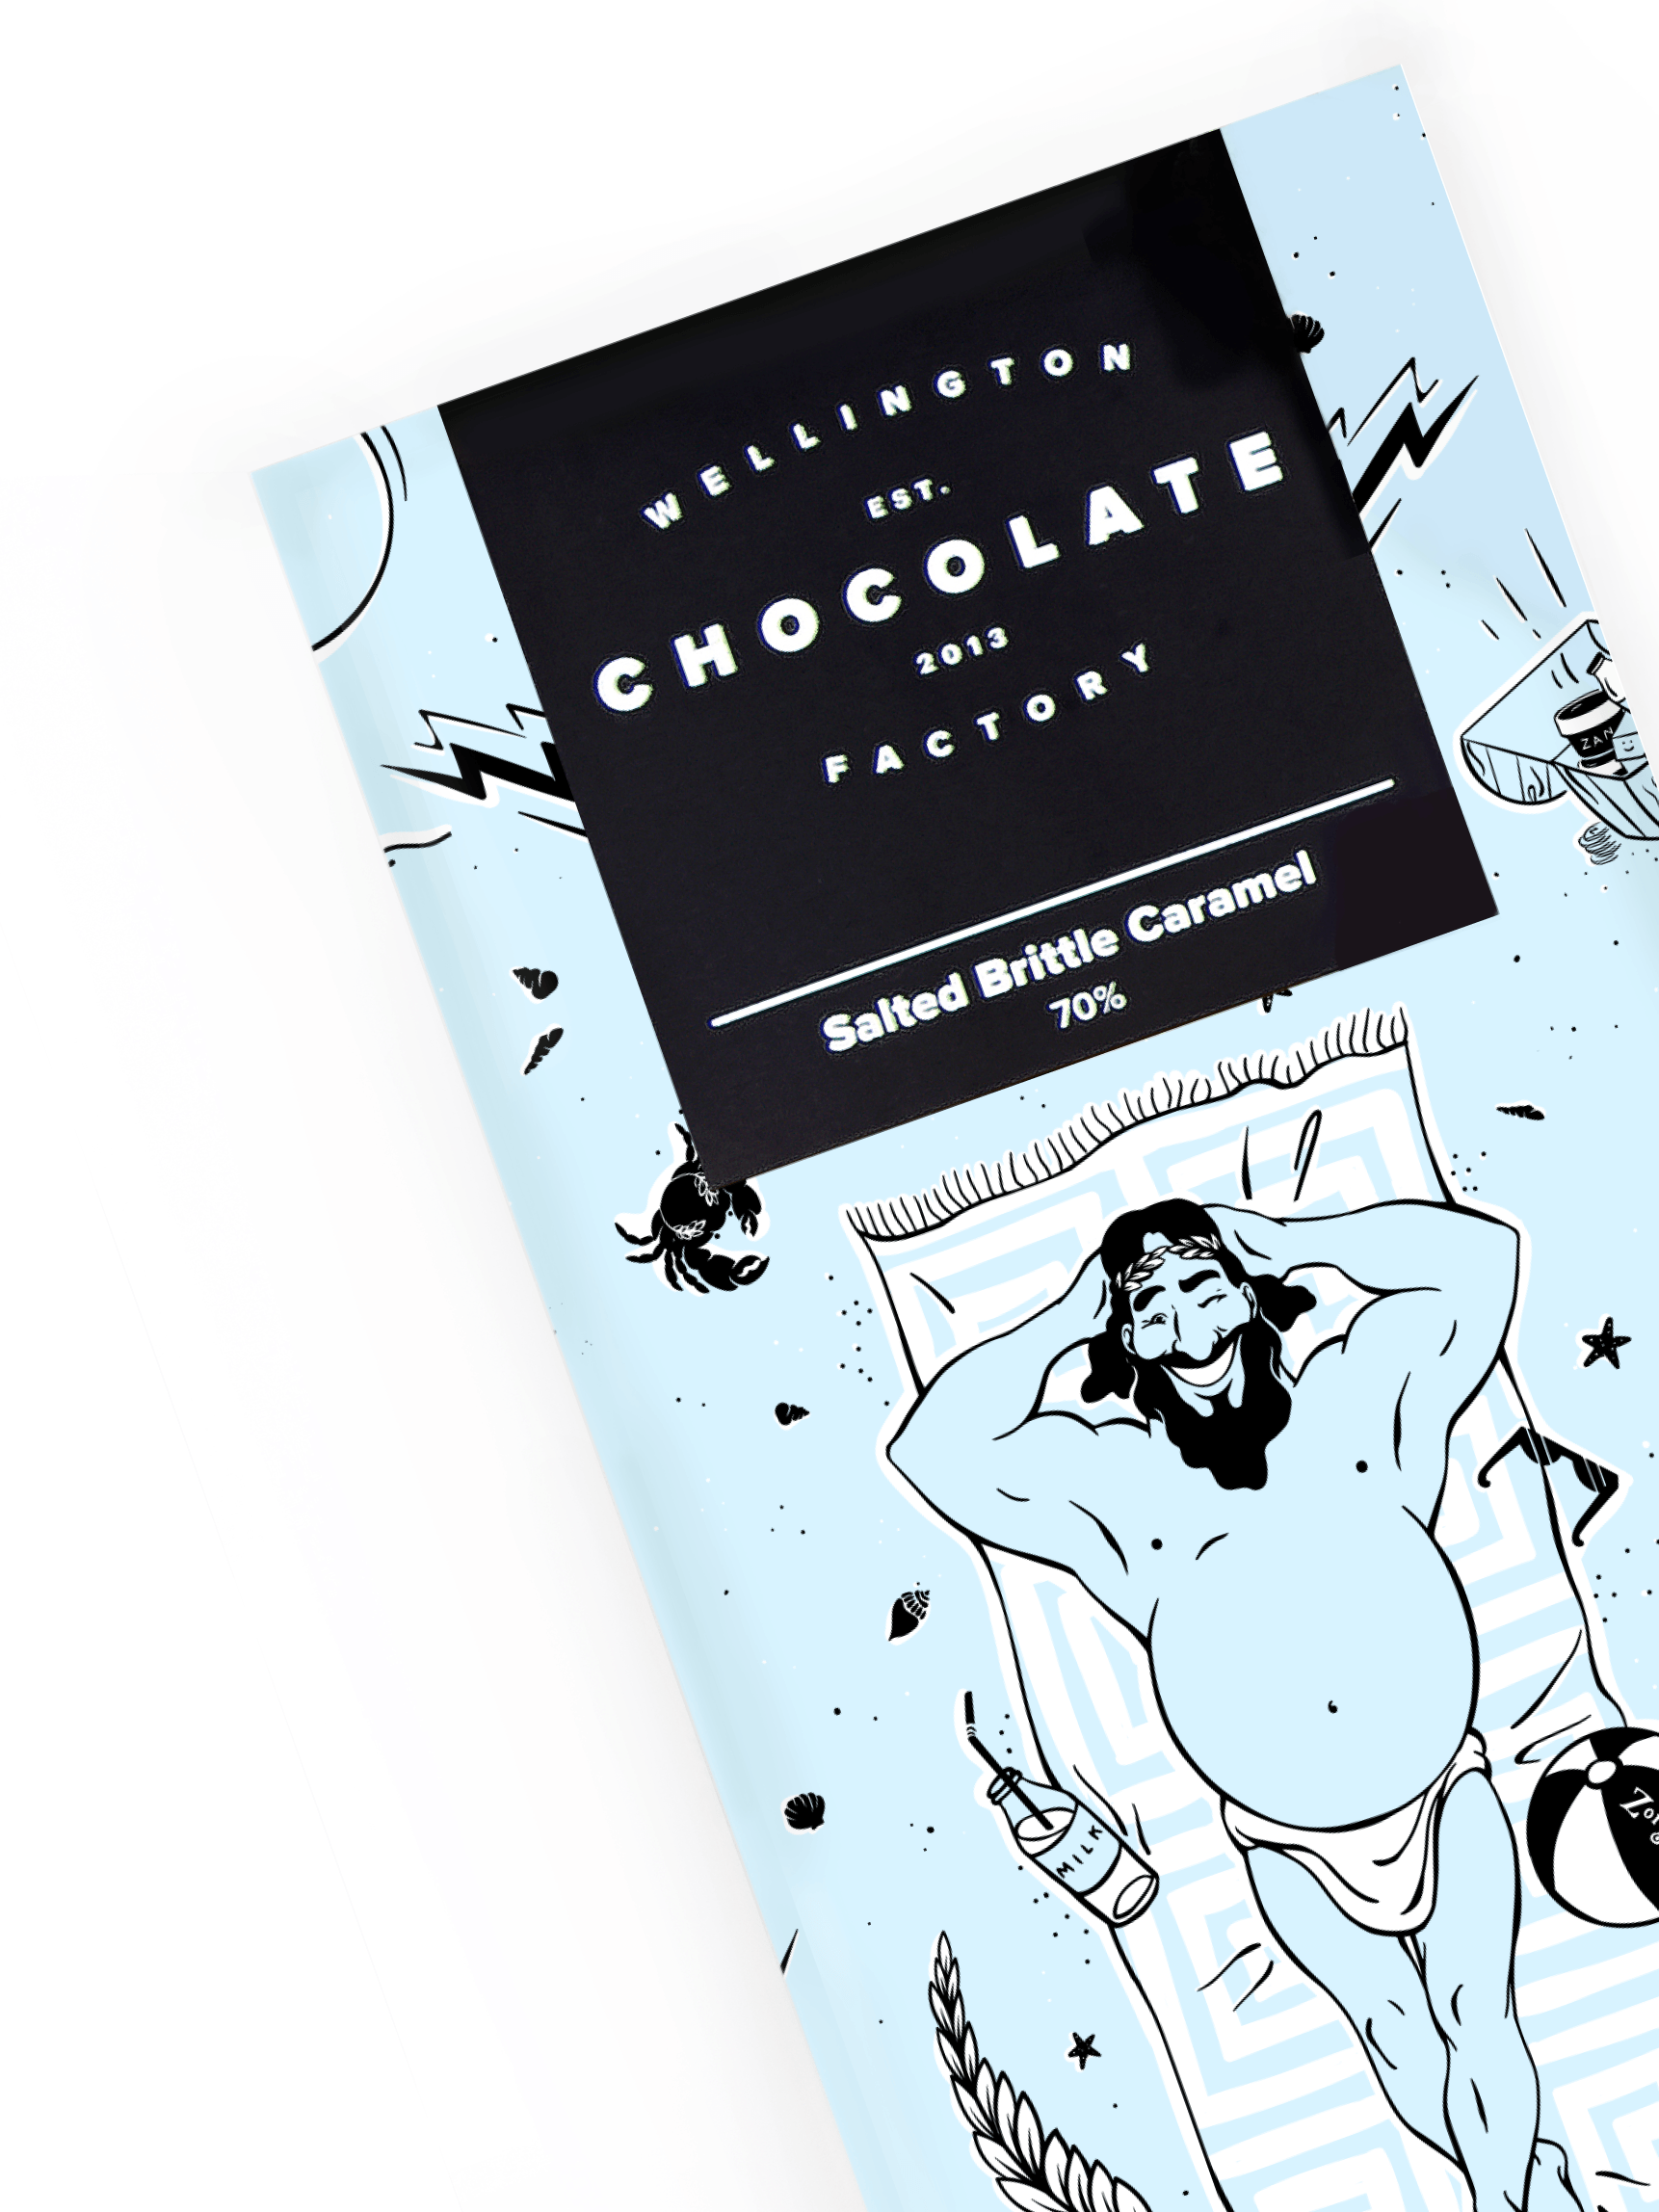 Wellington Chocolate Factory Illustration